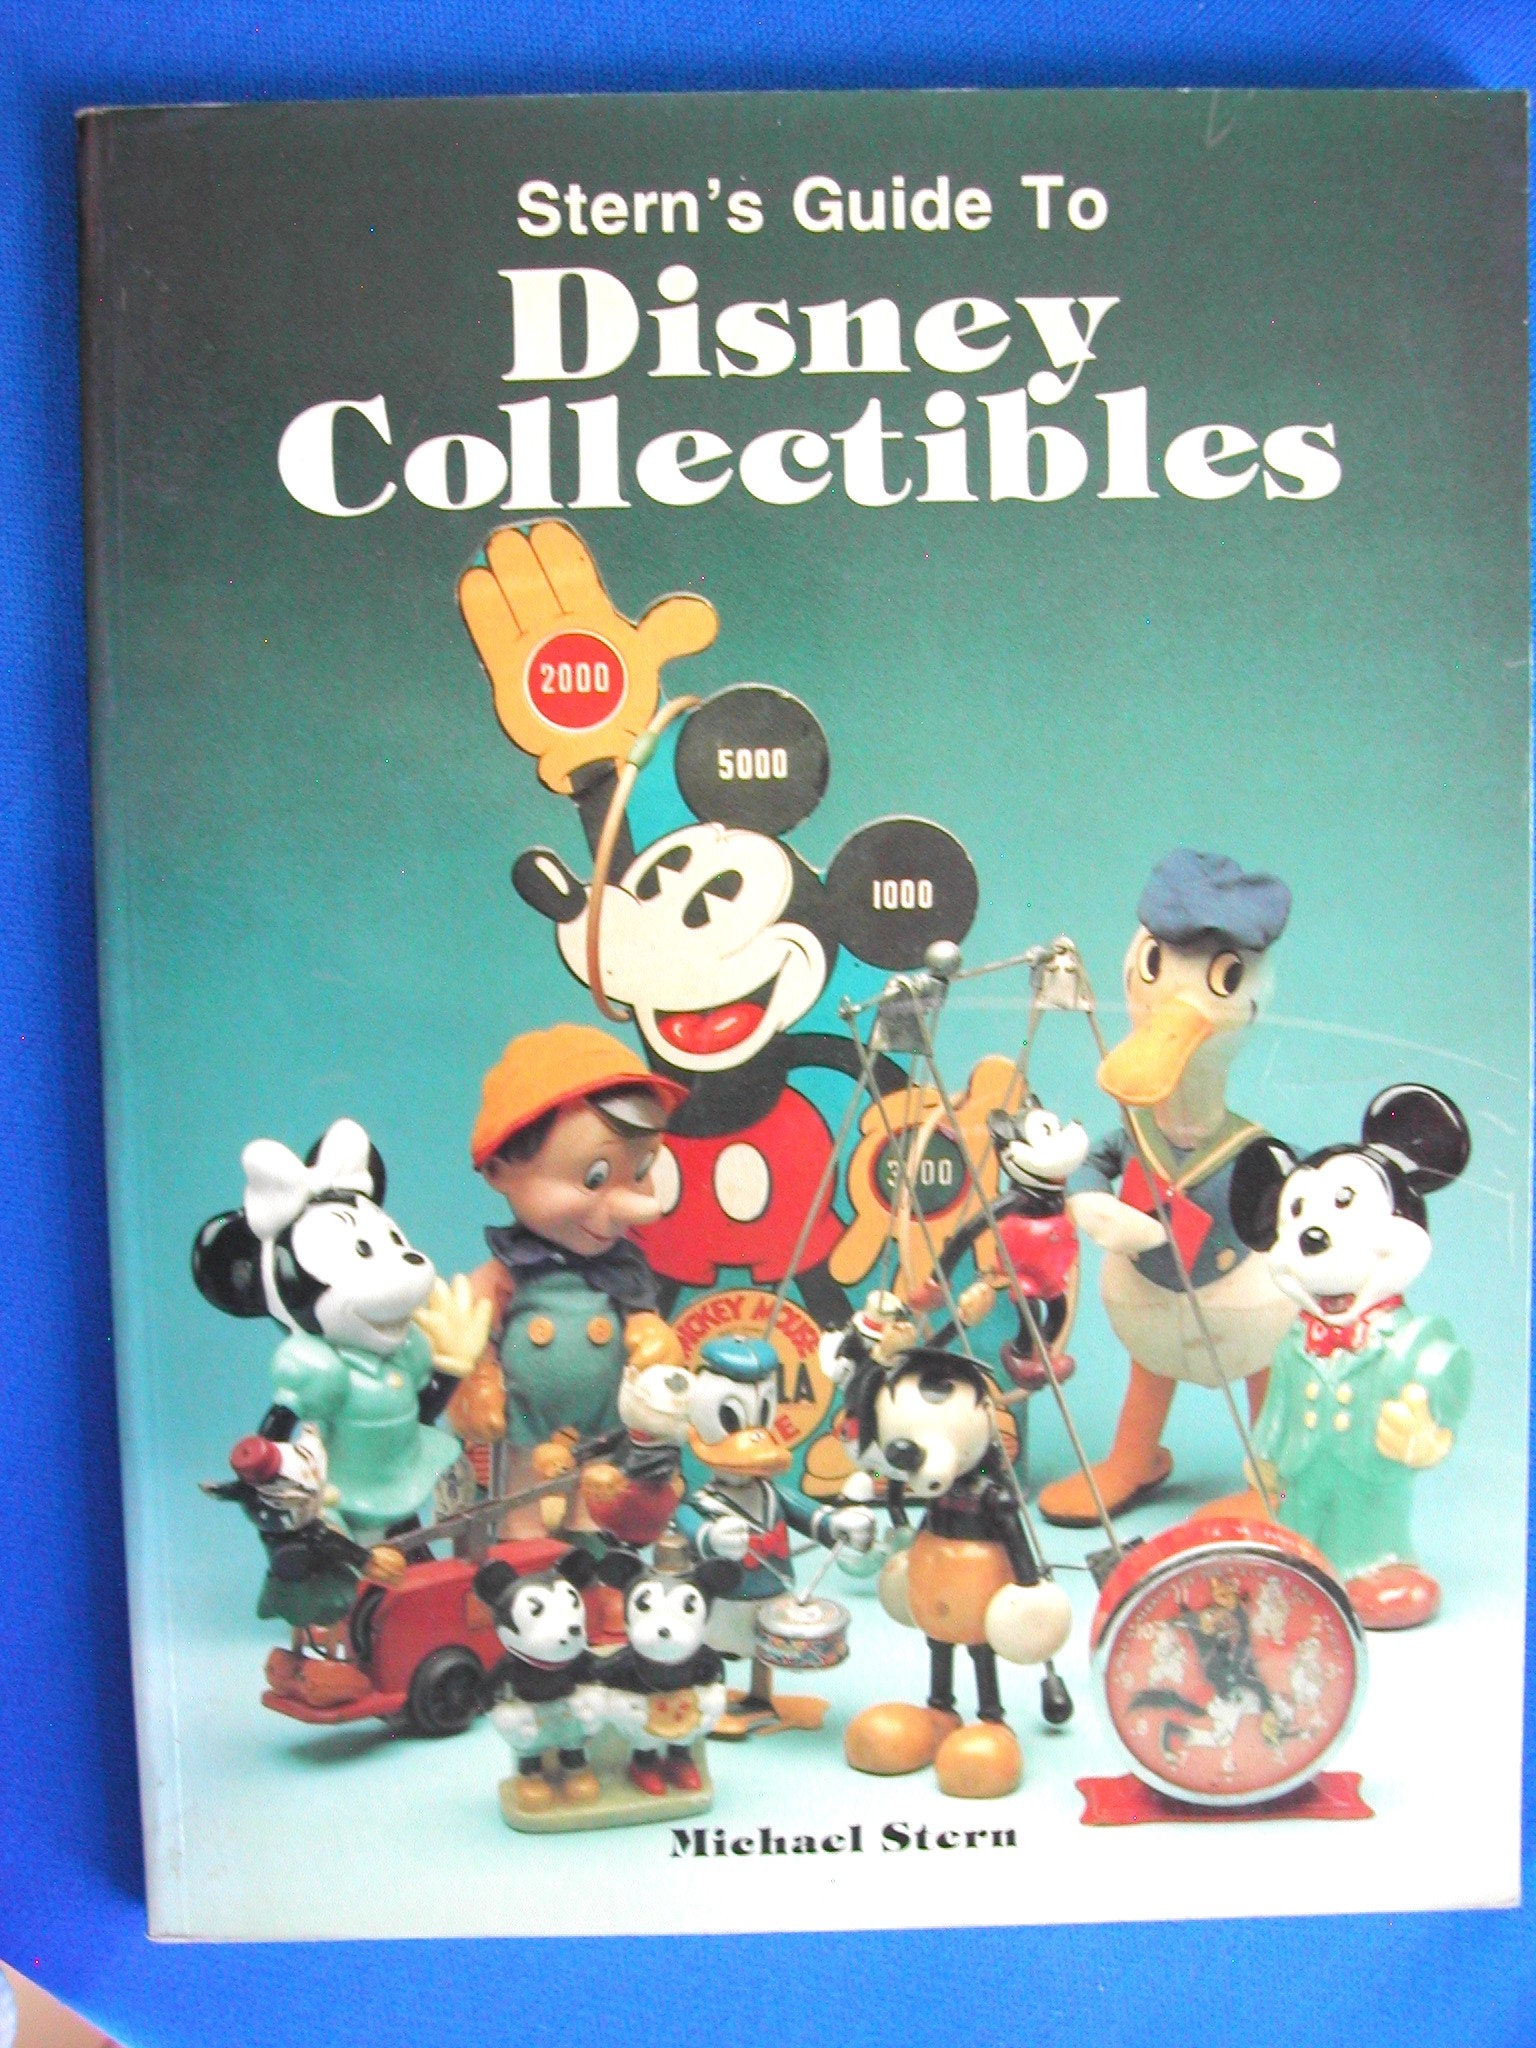 Disney Collectibles Book, Disneyana, Stern's Guide to Disney Collectibles  1989, Michael Stern